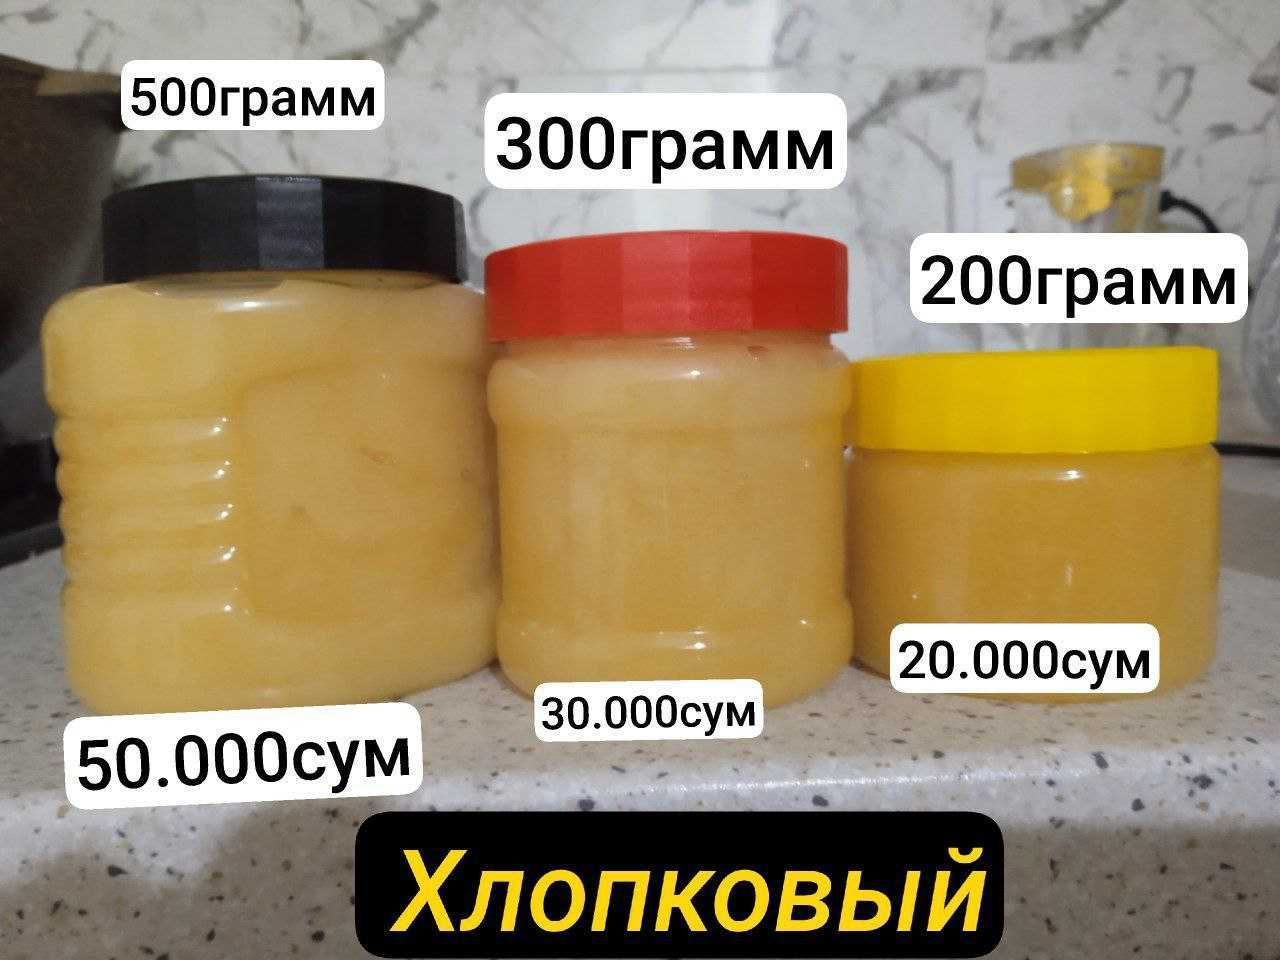 Натуральный мёд - Майский, Хлопковый, Янтарный.